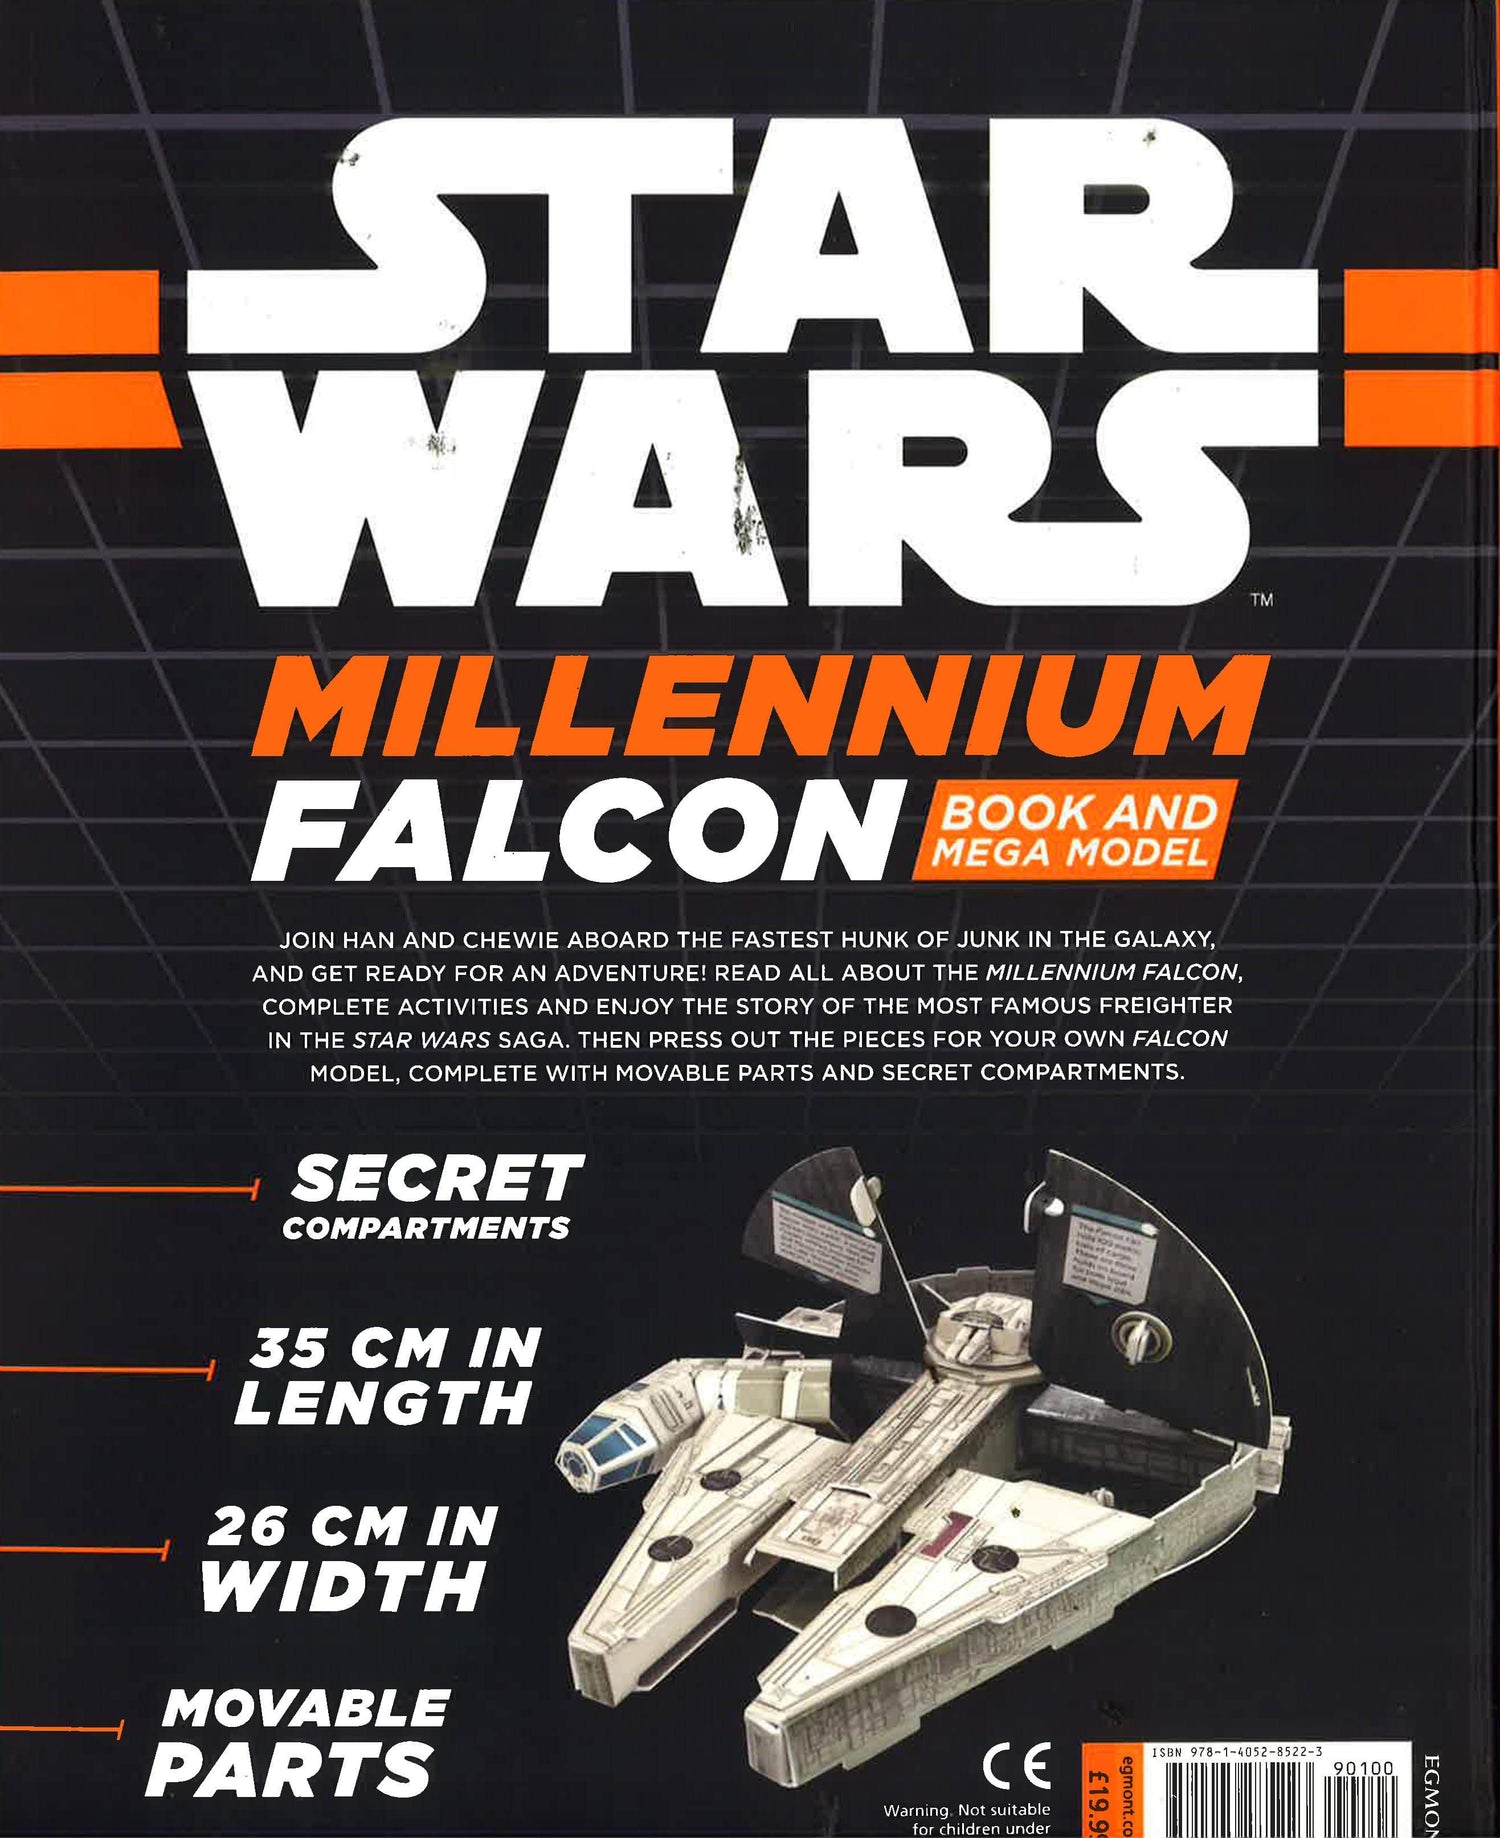 Star Wars Millennium Falcon Book And Mega Model